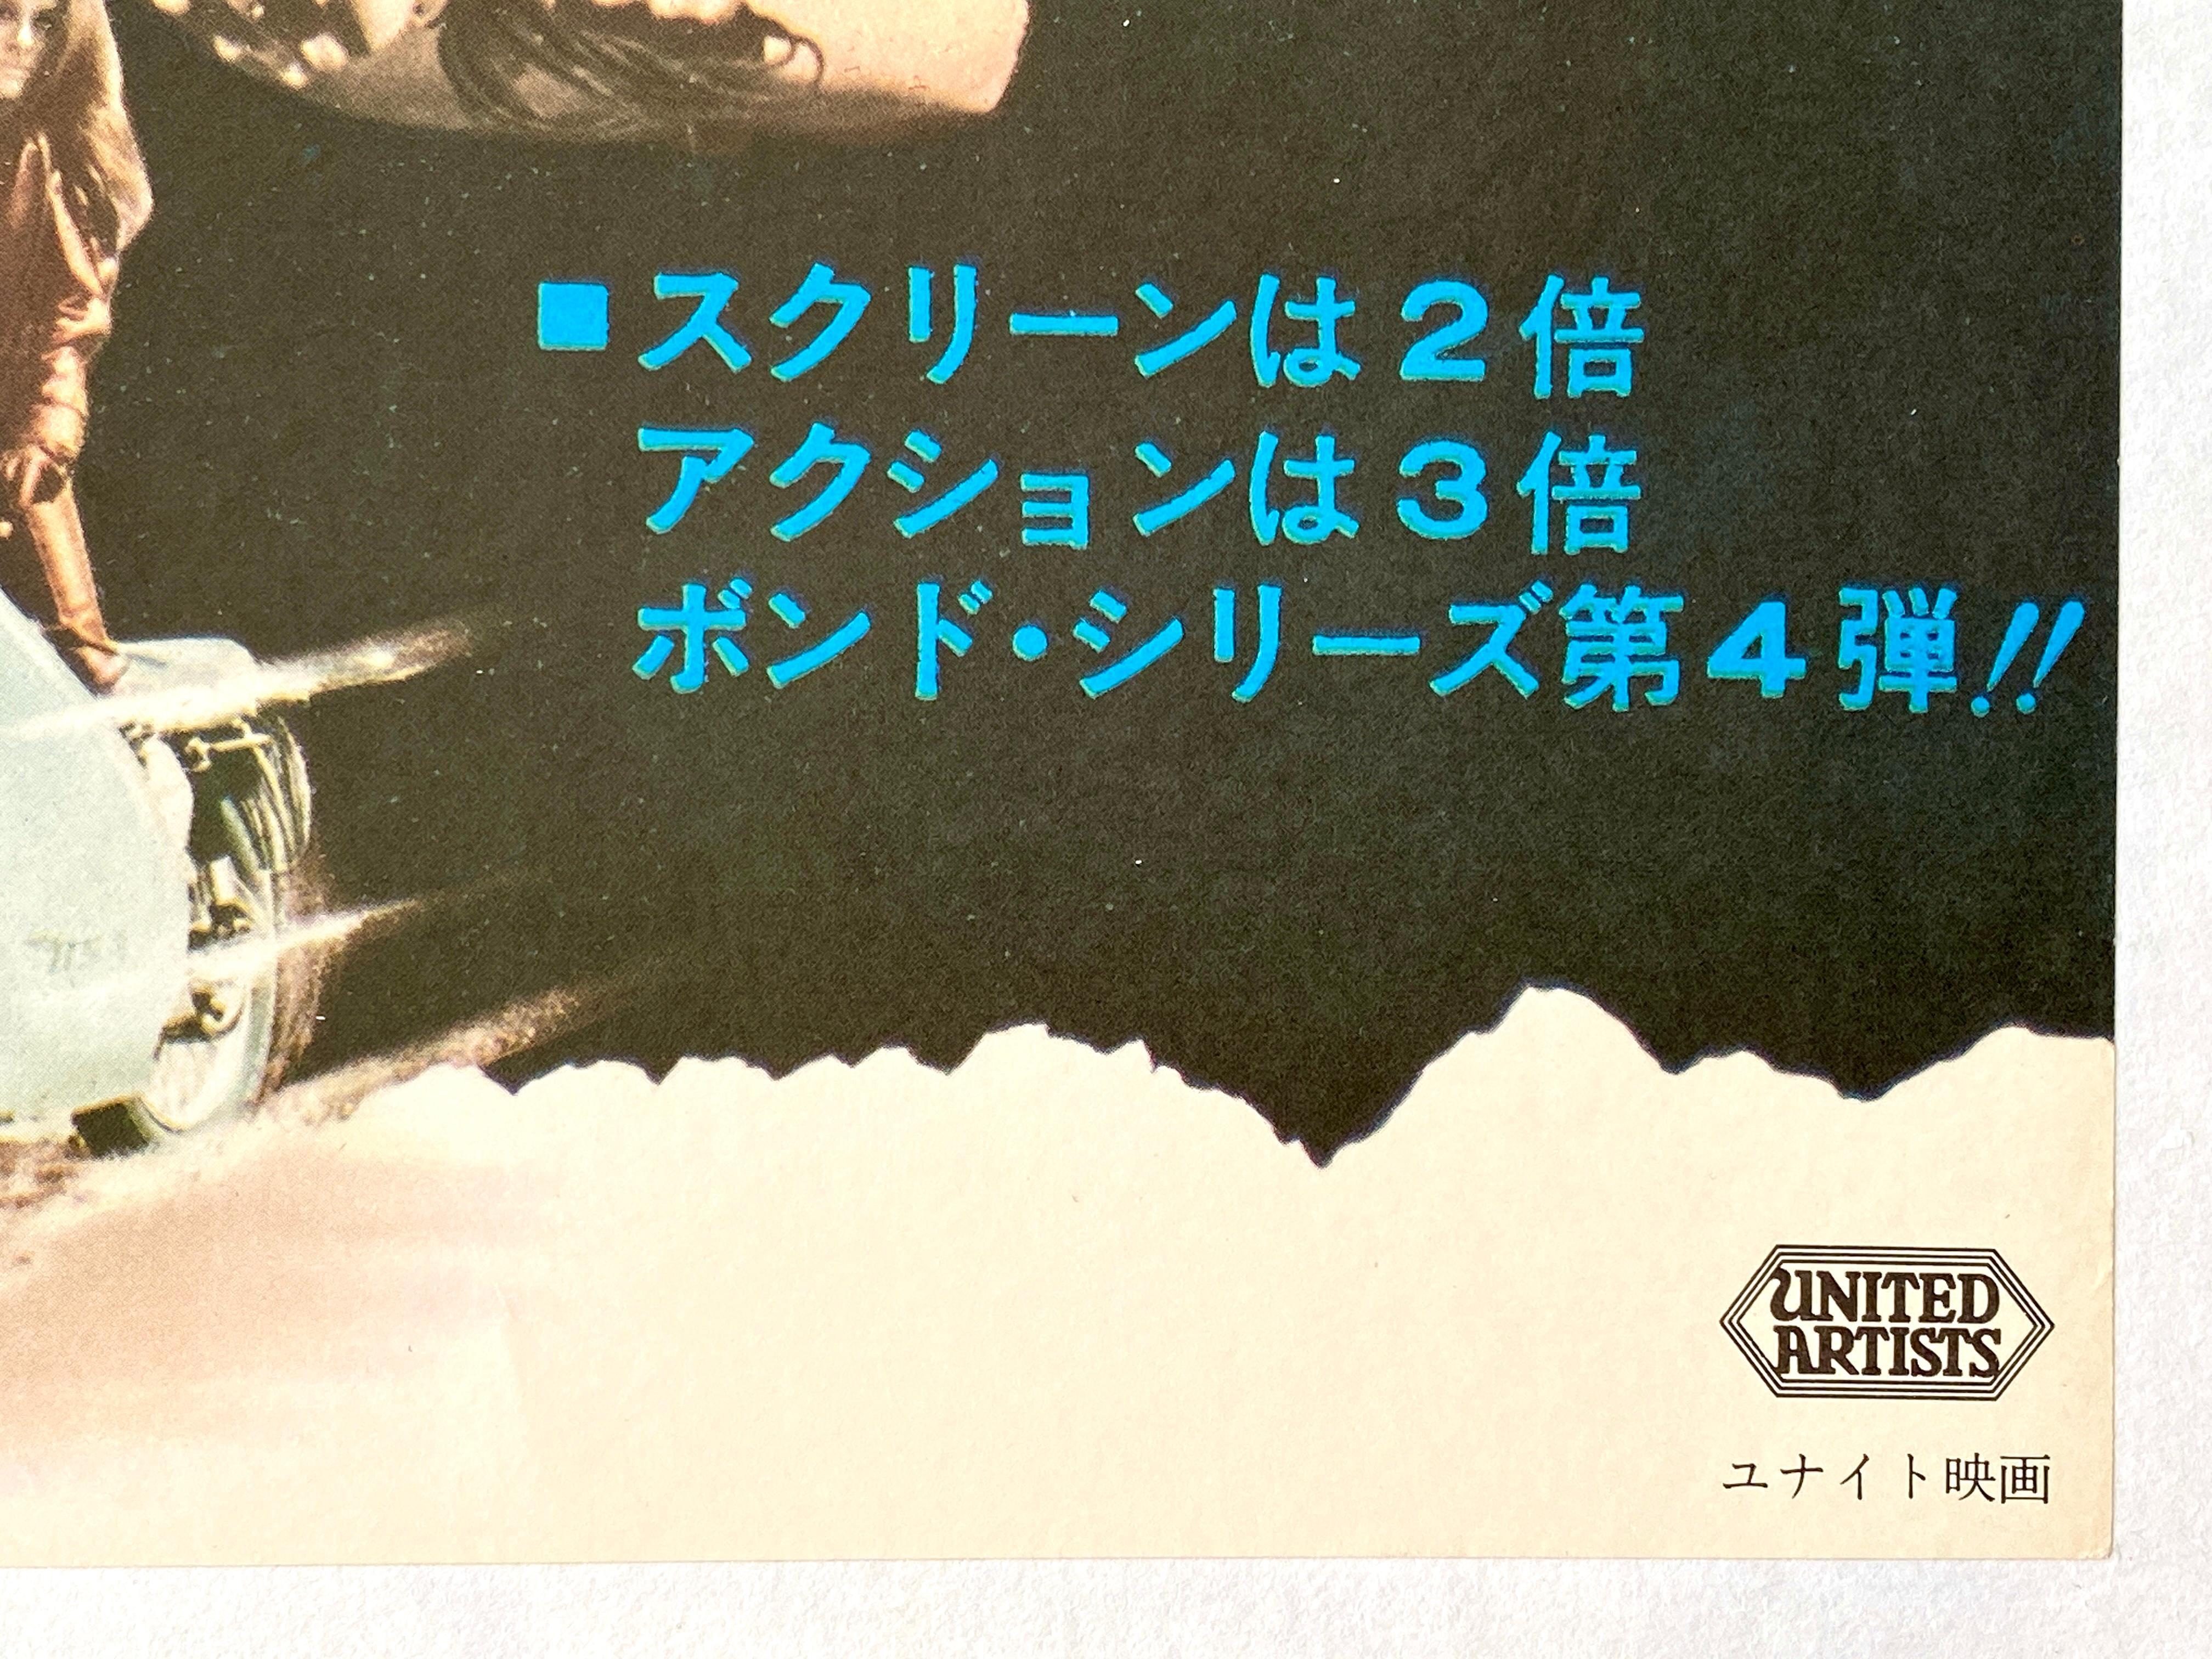 James Bond 'Thunderball' Original Vintage Movie Poster, Japanese, 1965 For Sale 8